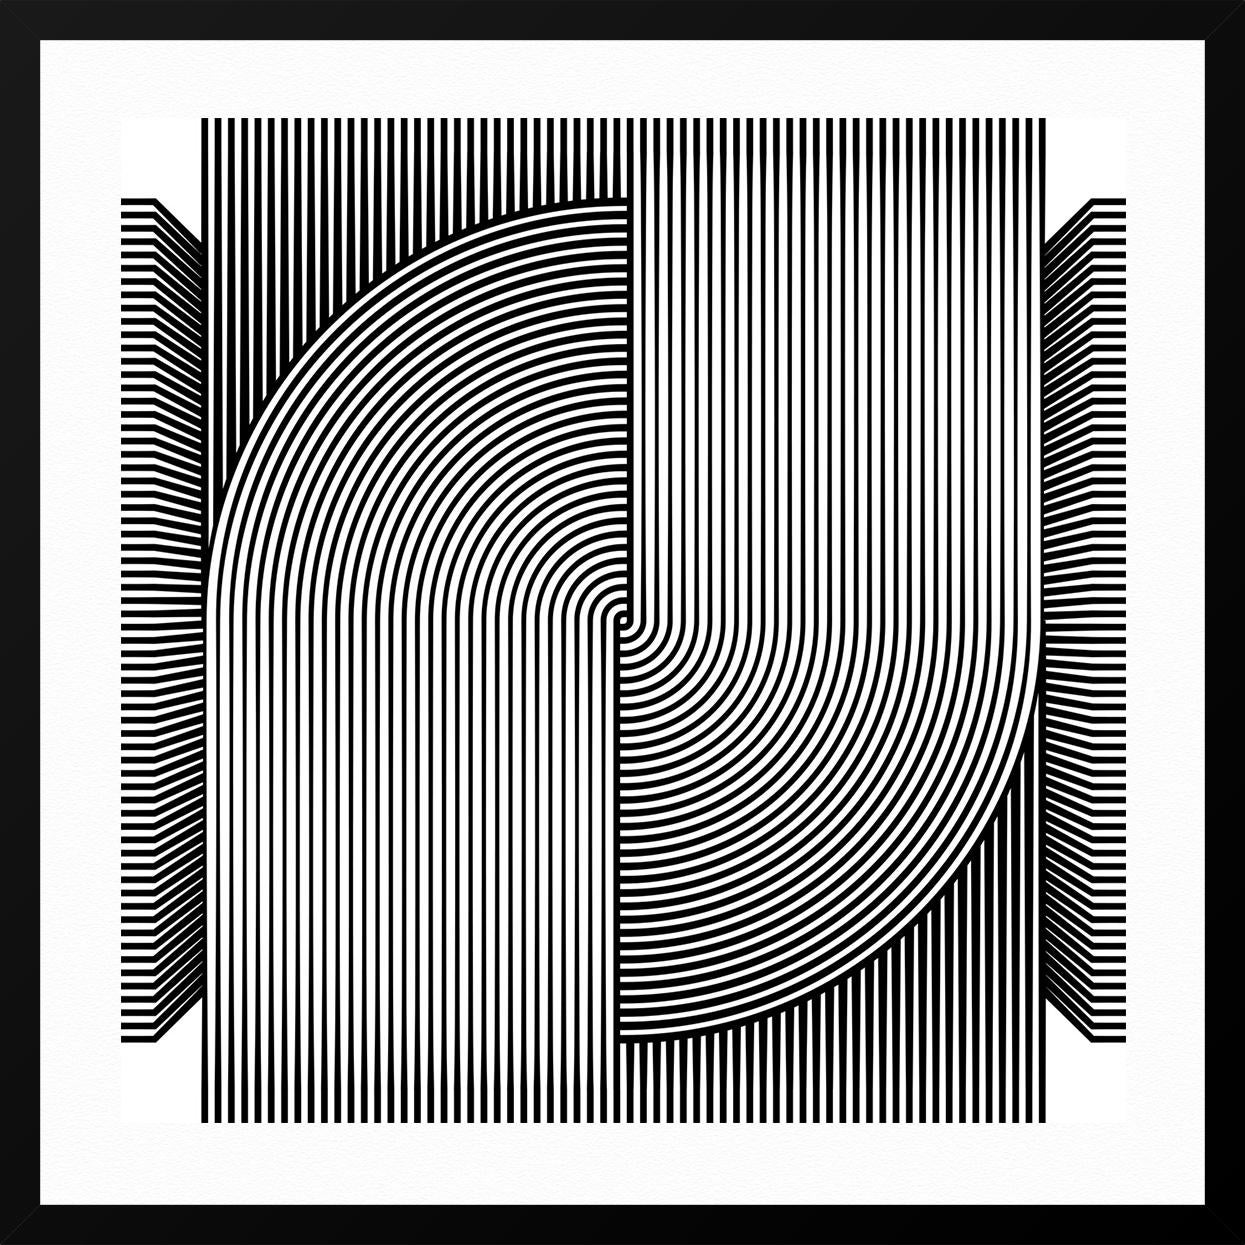 Continuation 3 13 - Black Abstract Photograph by John Harman